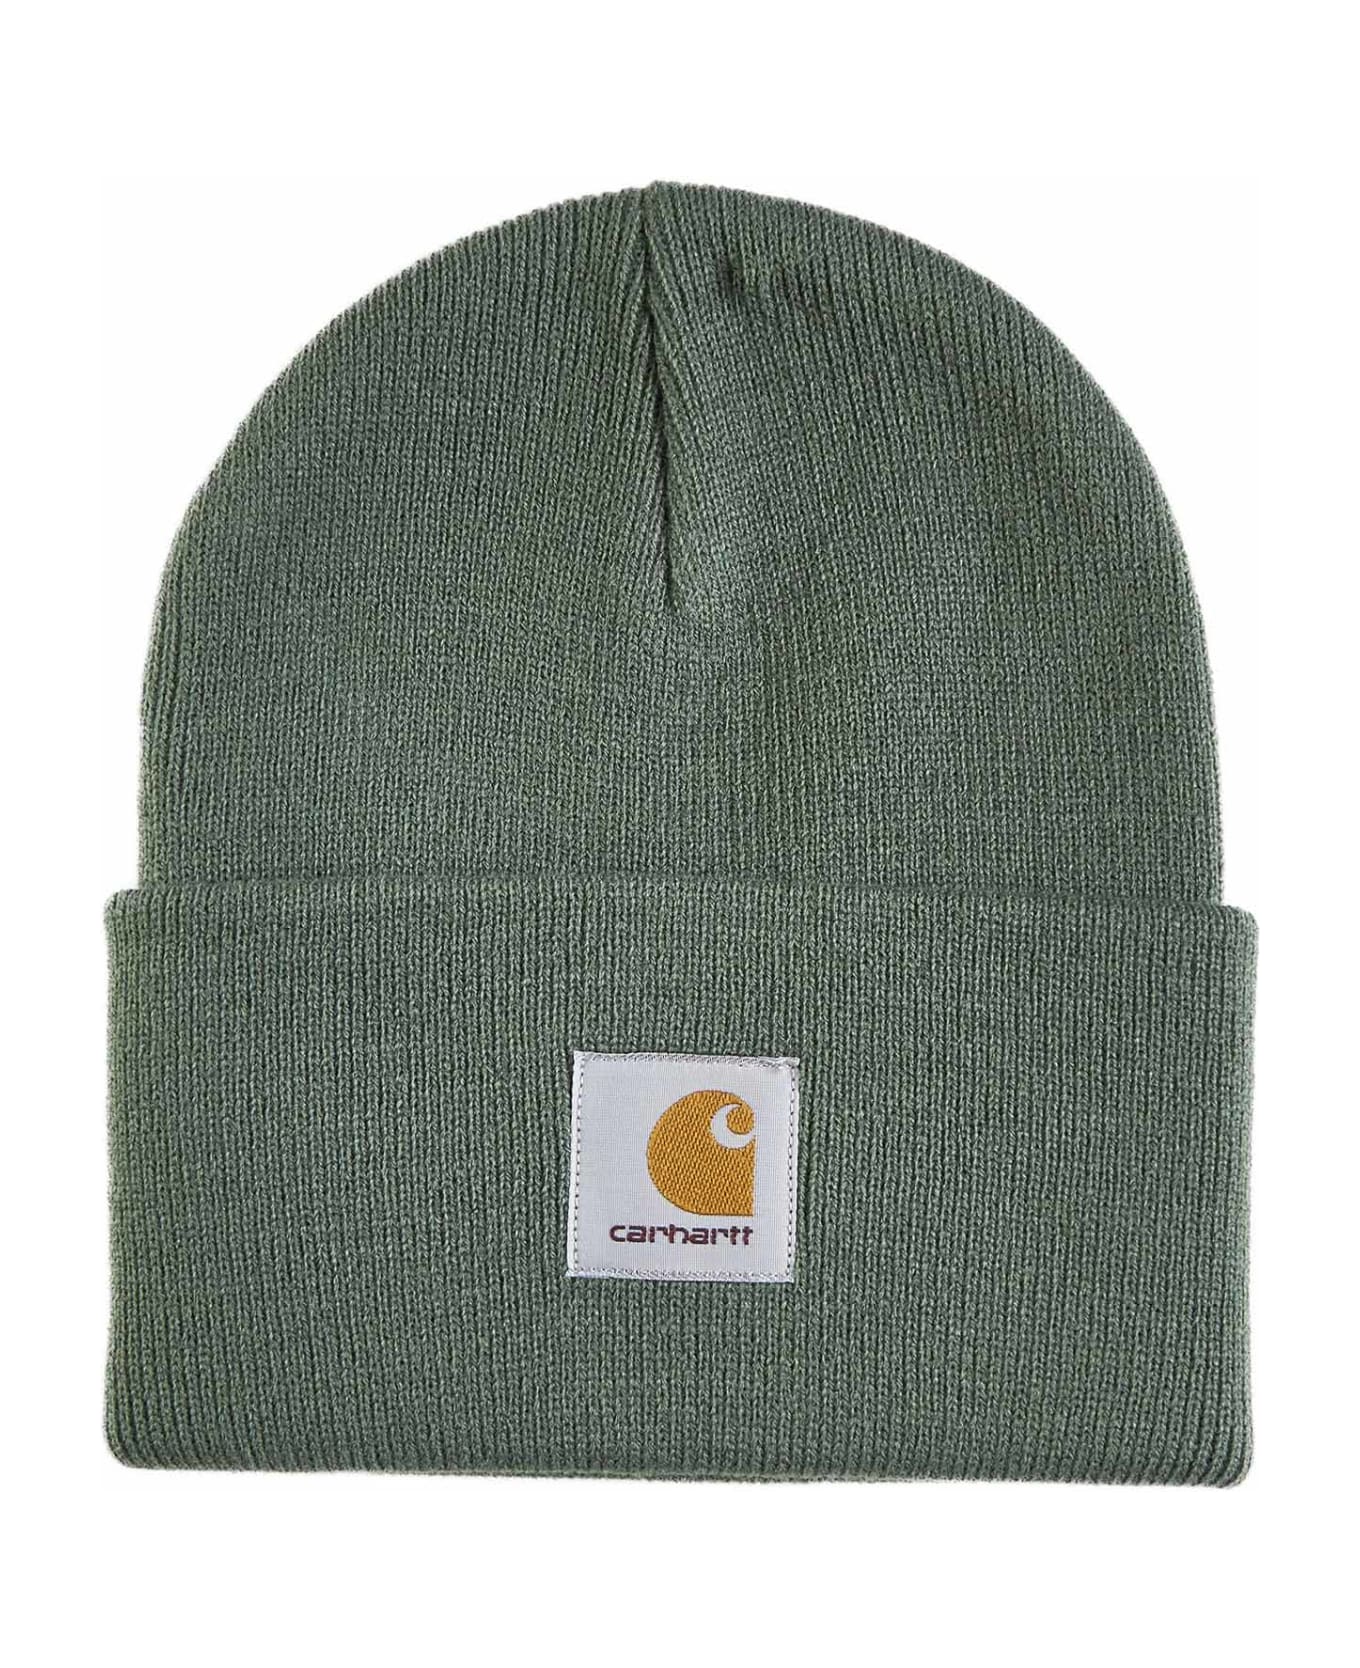 Carhartt Hat - Duck green 帽子